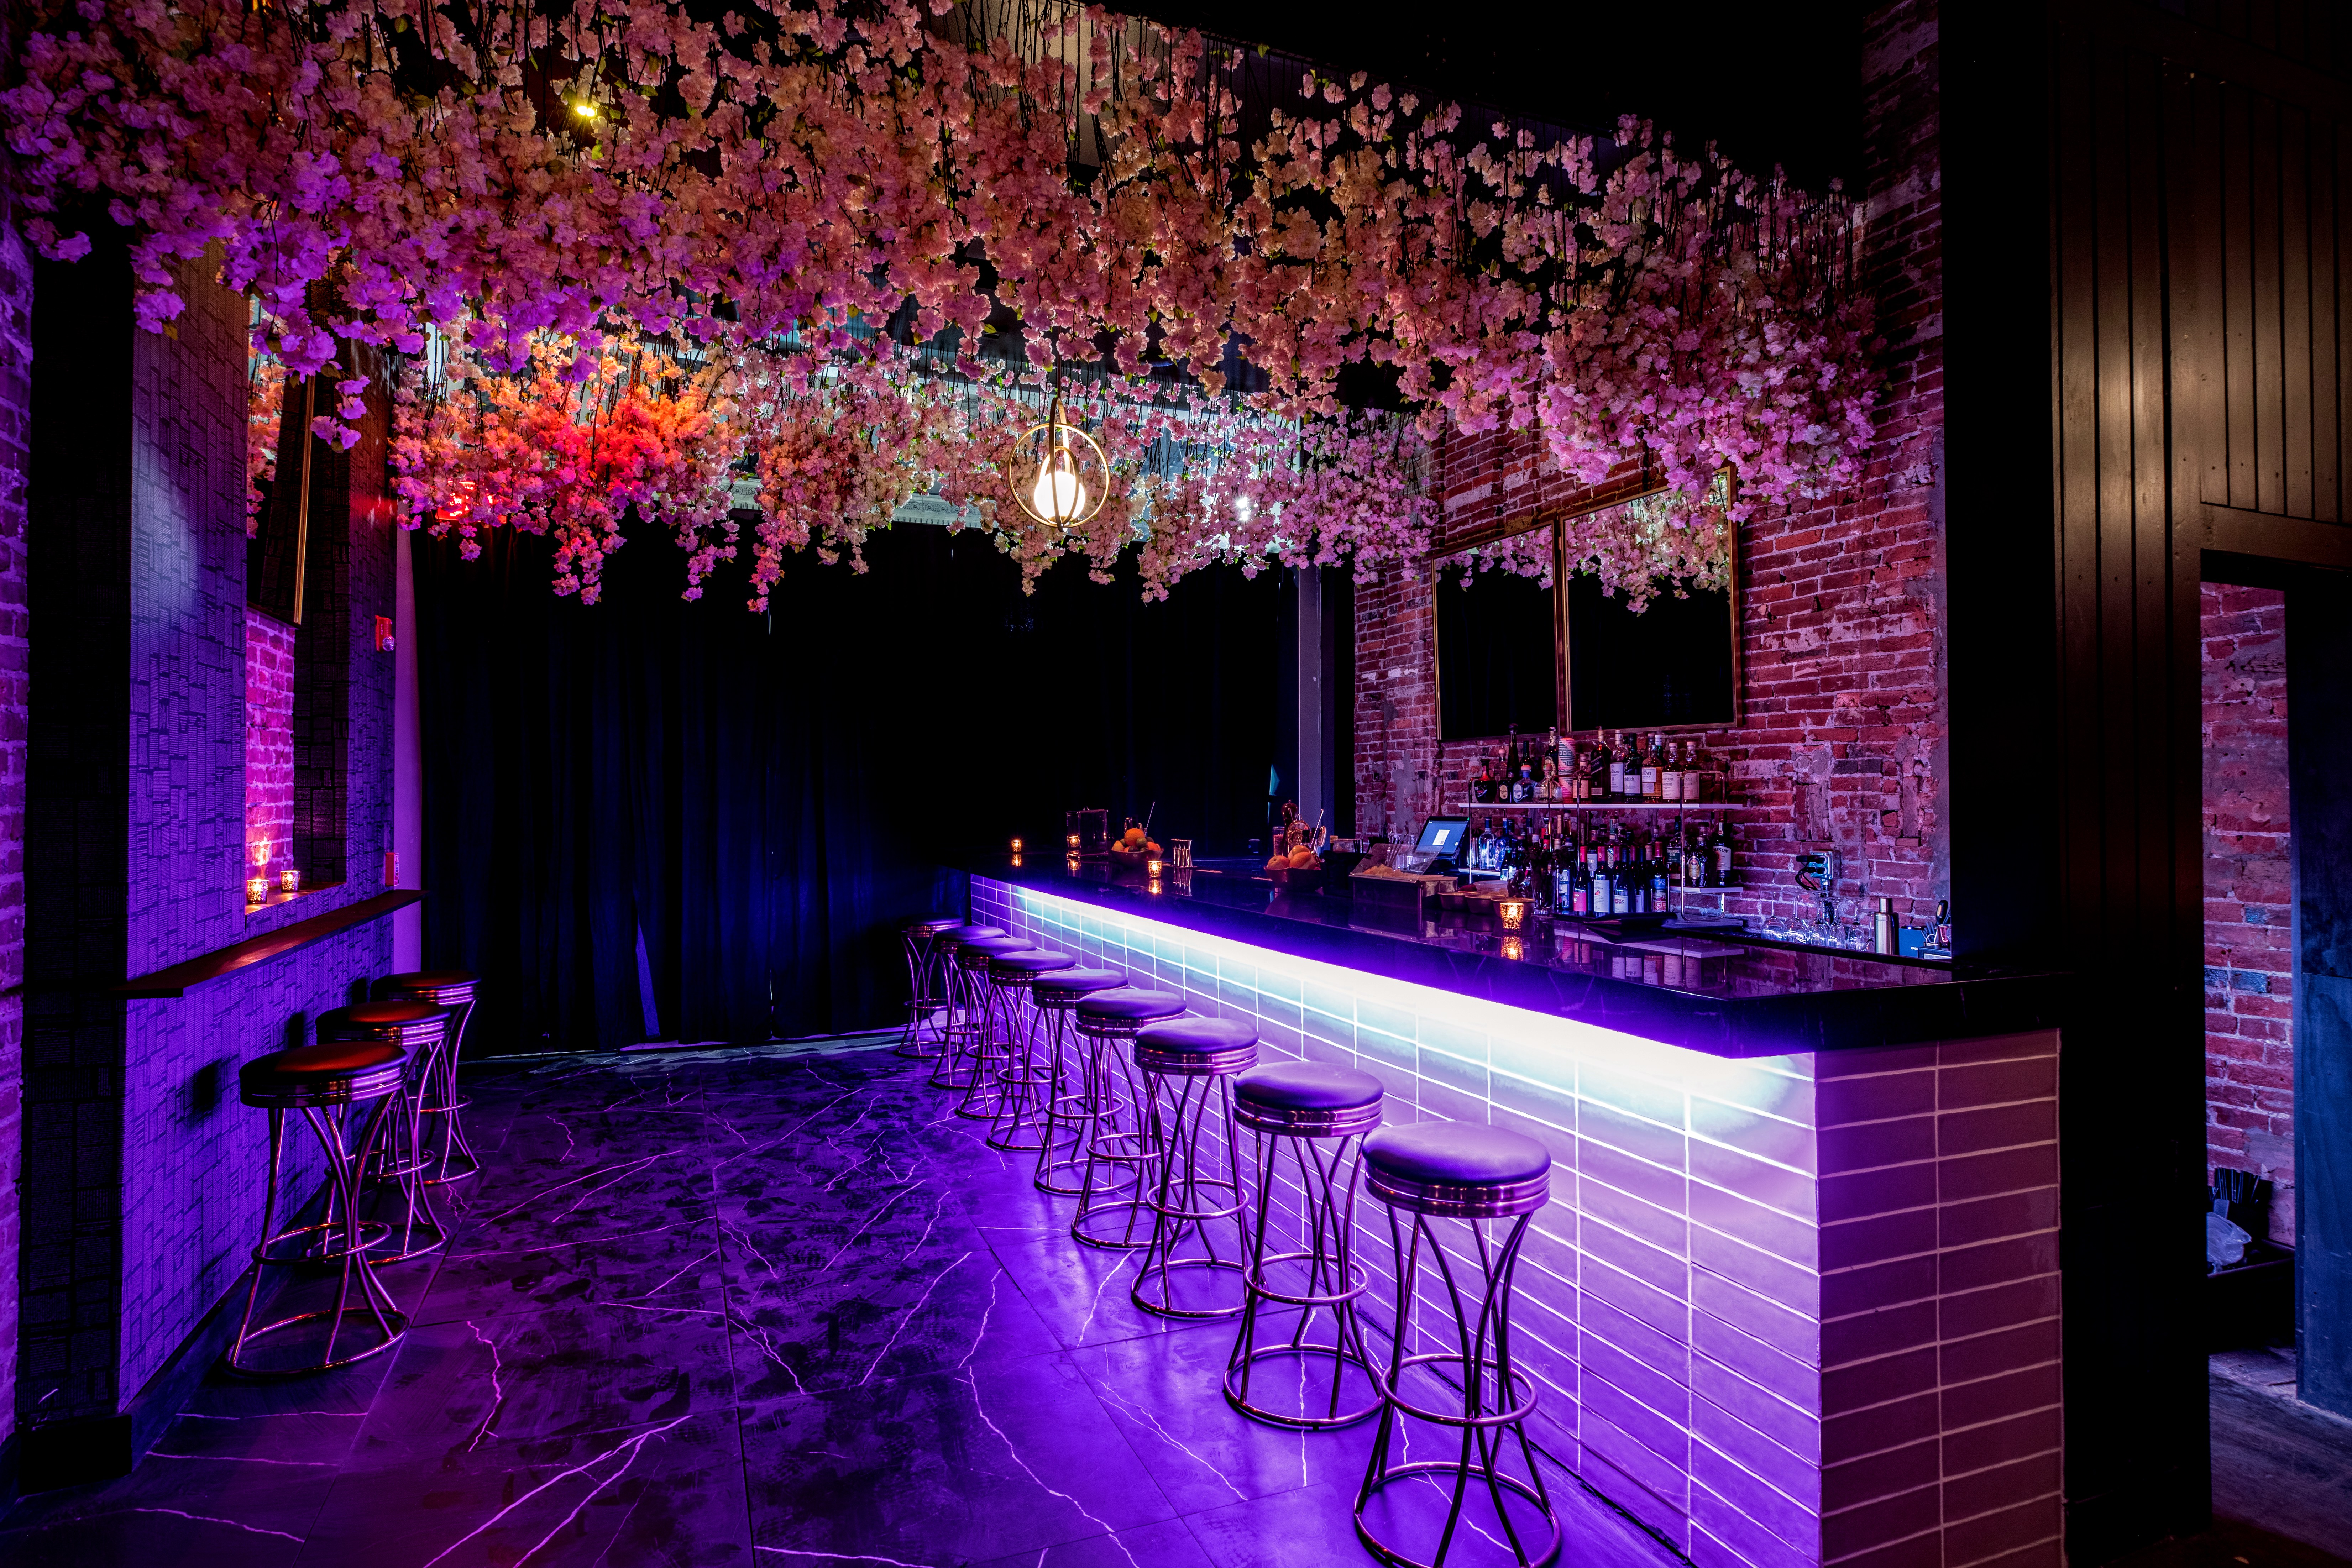 dark, purple-lit bar with flower curtain hanging above